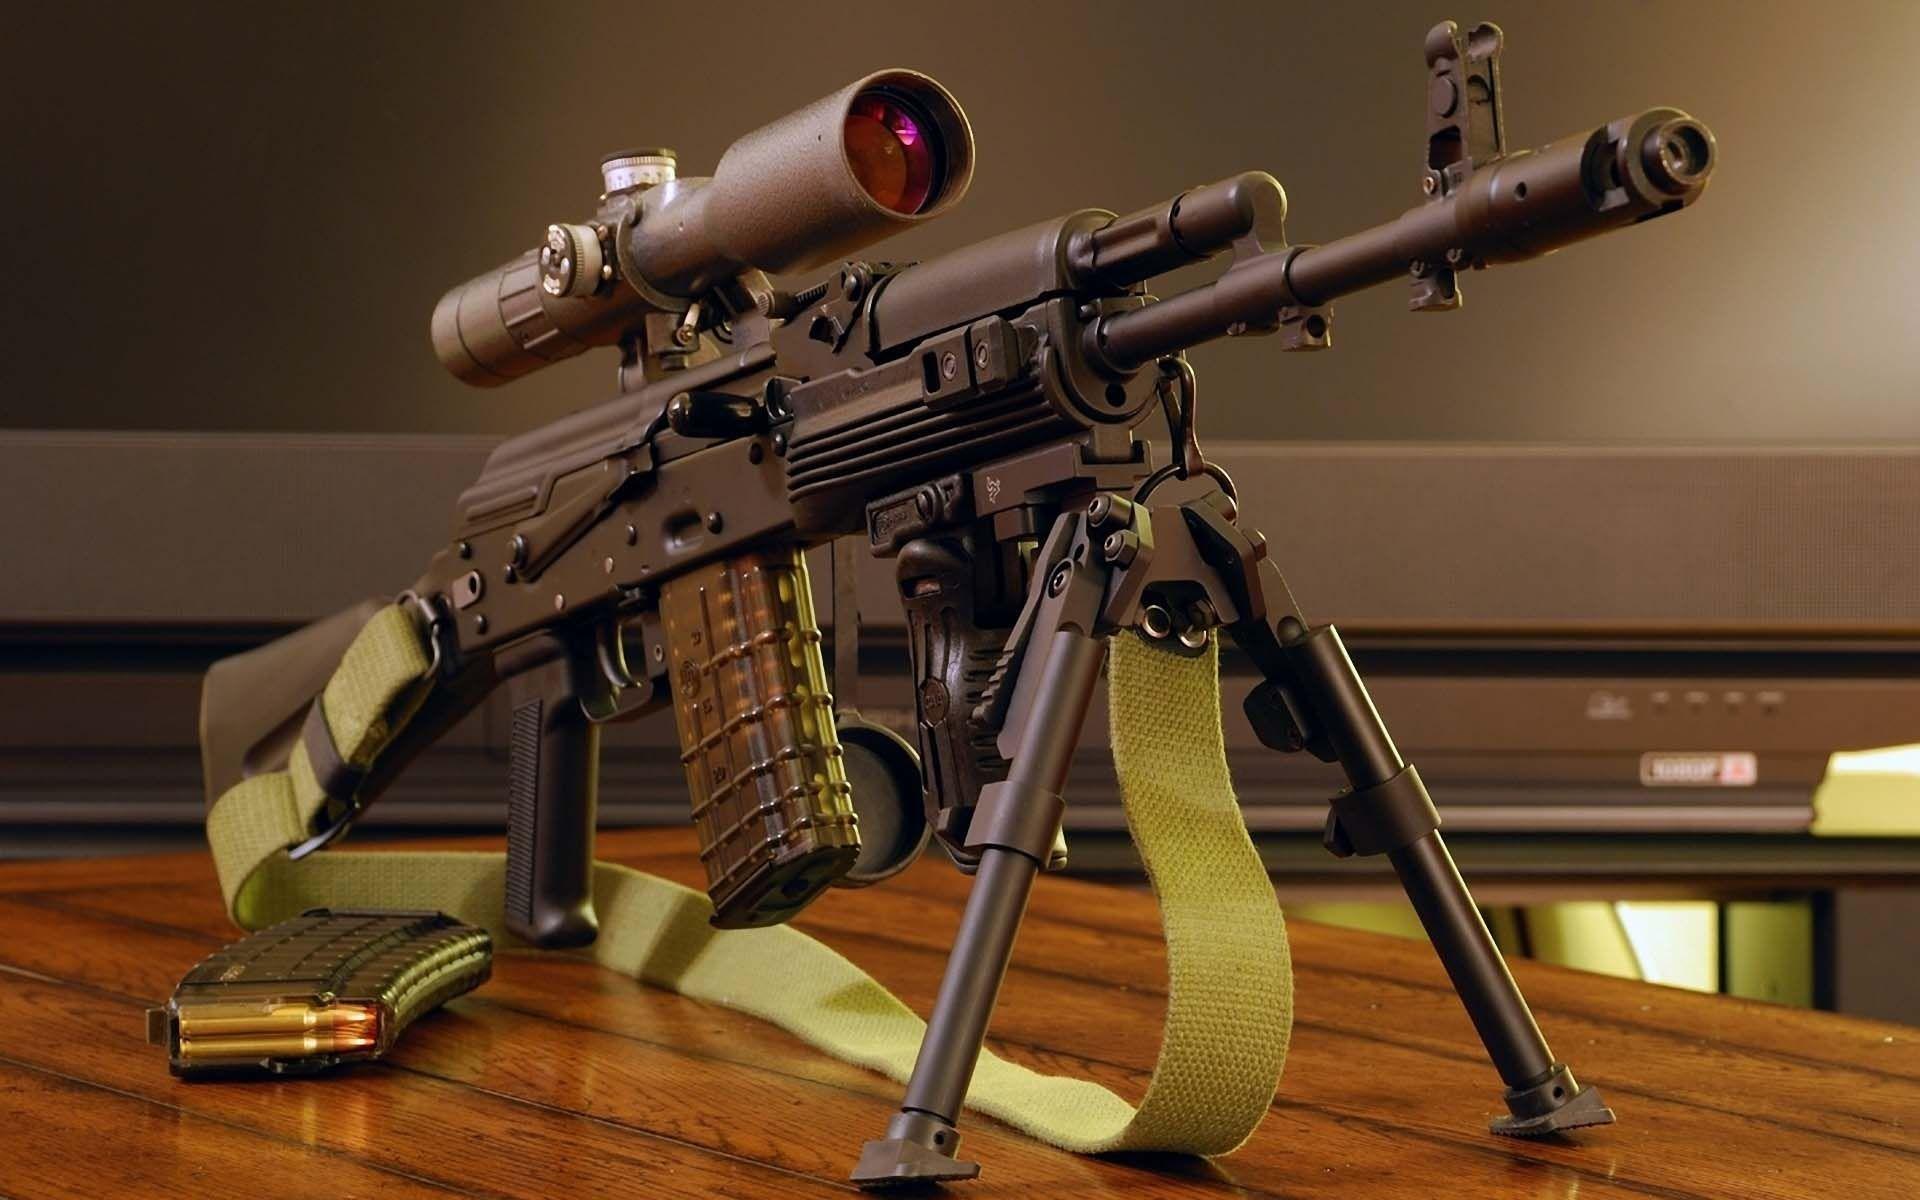 Sniper Gun Front View. HD Guns Wallpaper for Mobile and Desktop